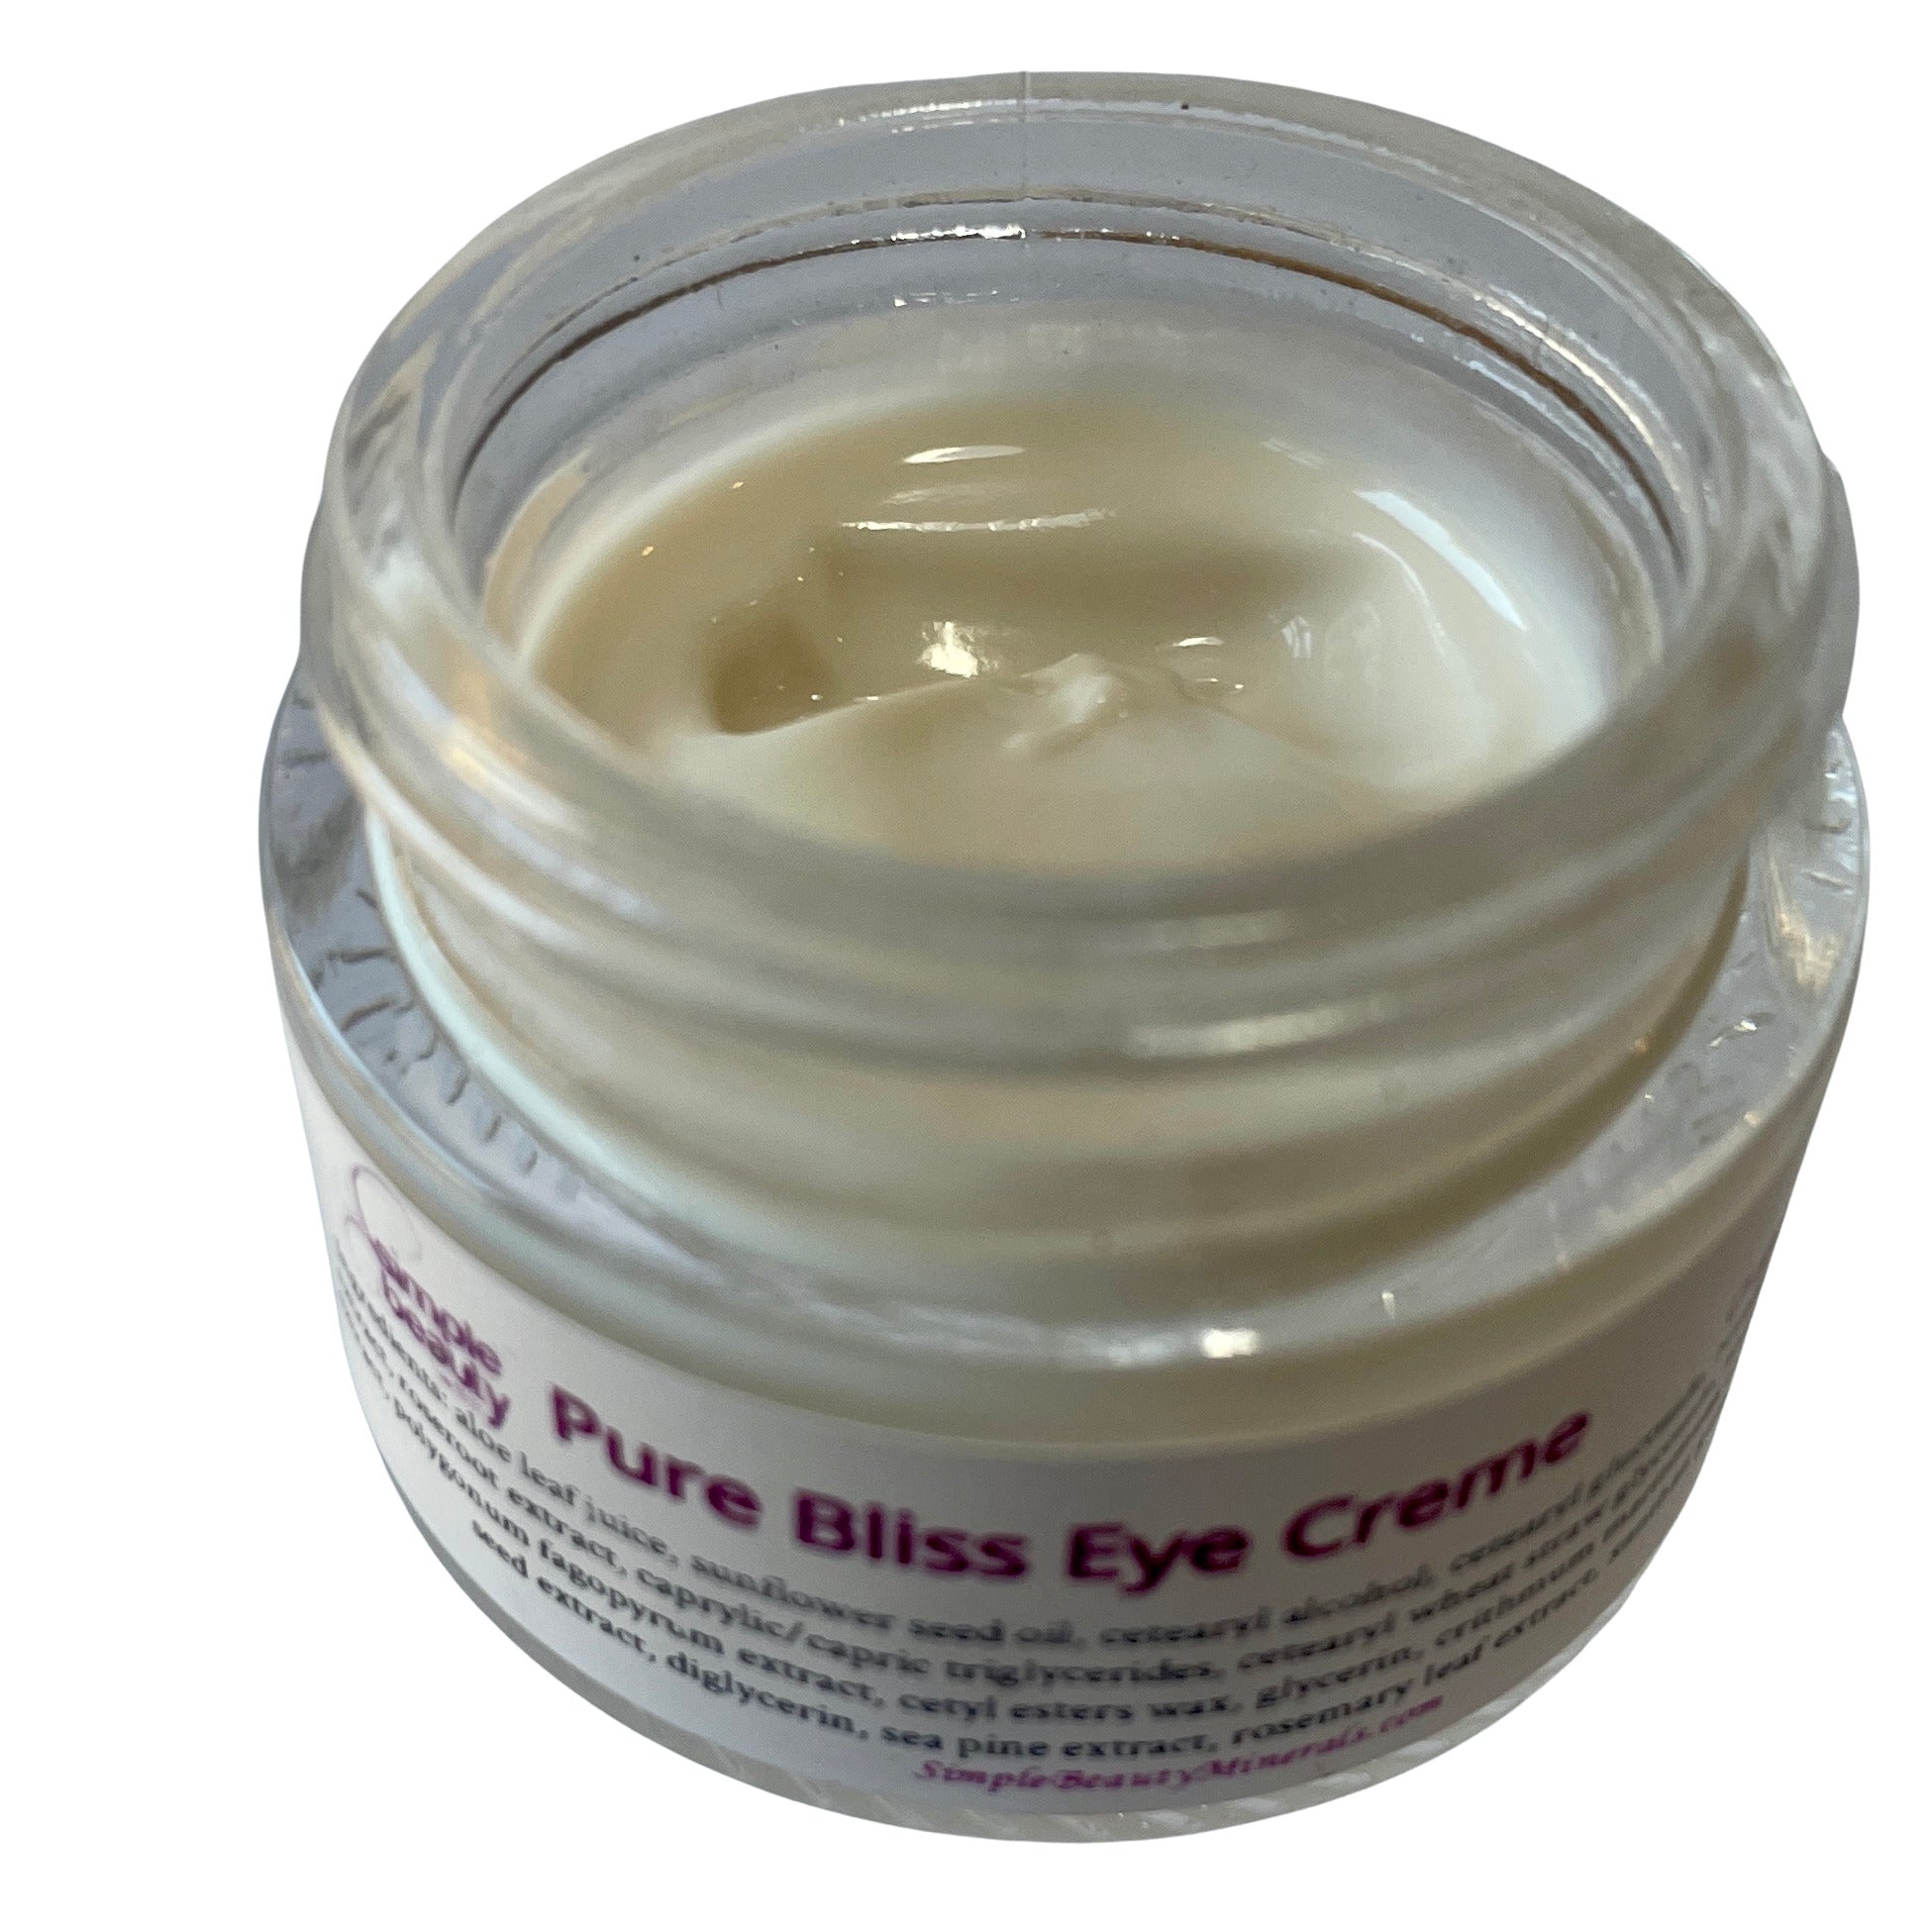 pure bliss eye creme anti aging glass jar